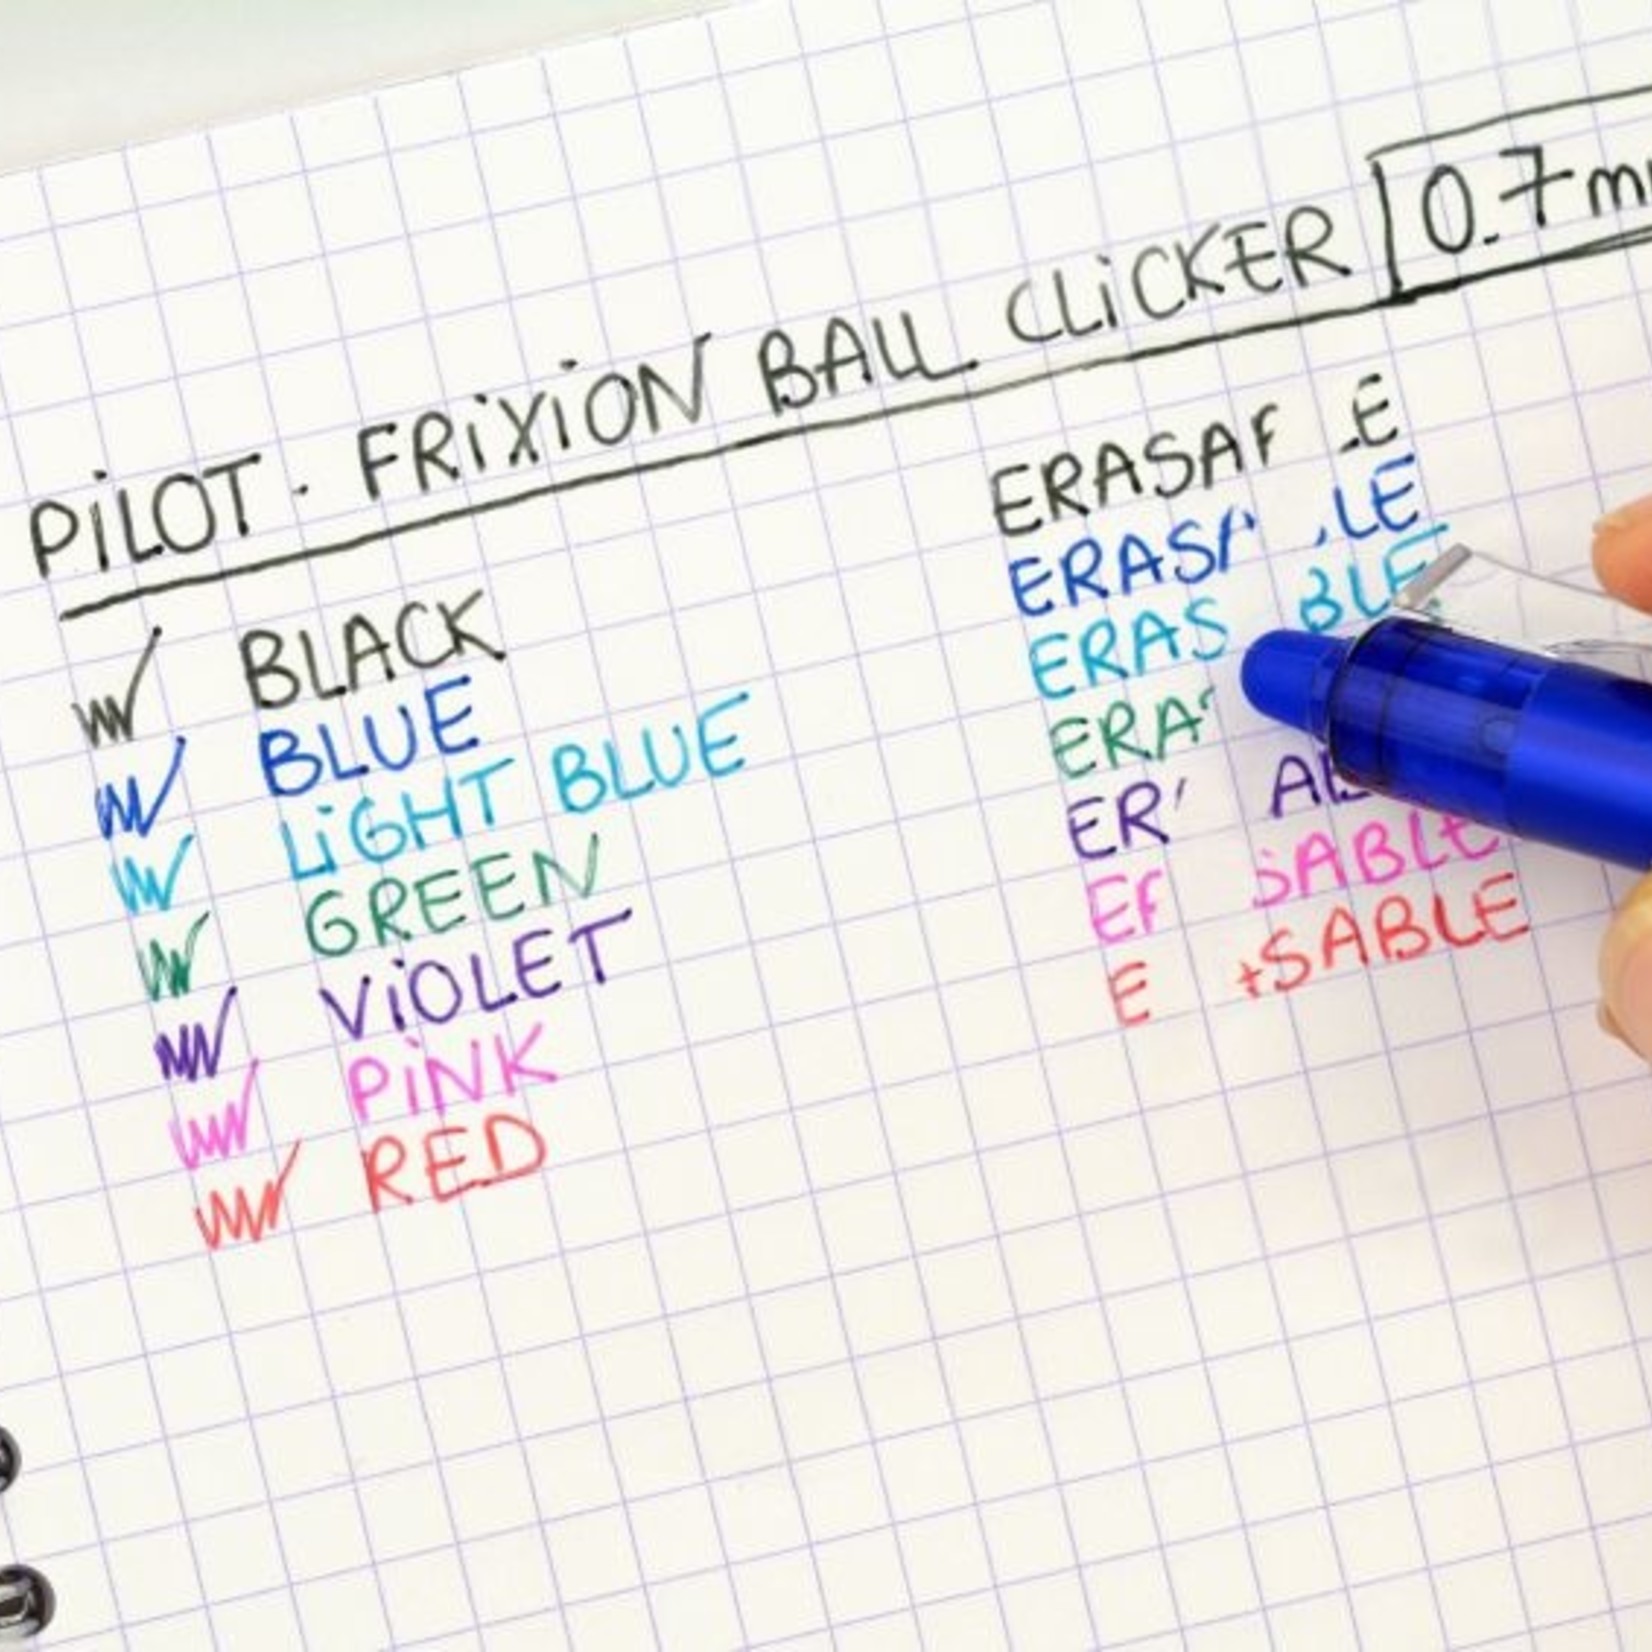 PILOT FRIXION BALL CLICKER ERASABLE INK PEN FINE 0.7MM GREEN